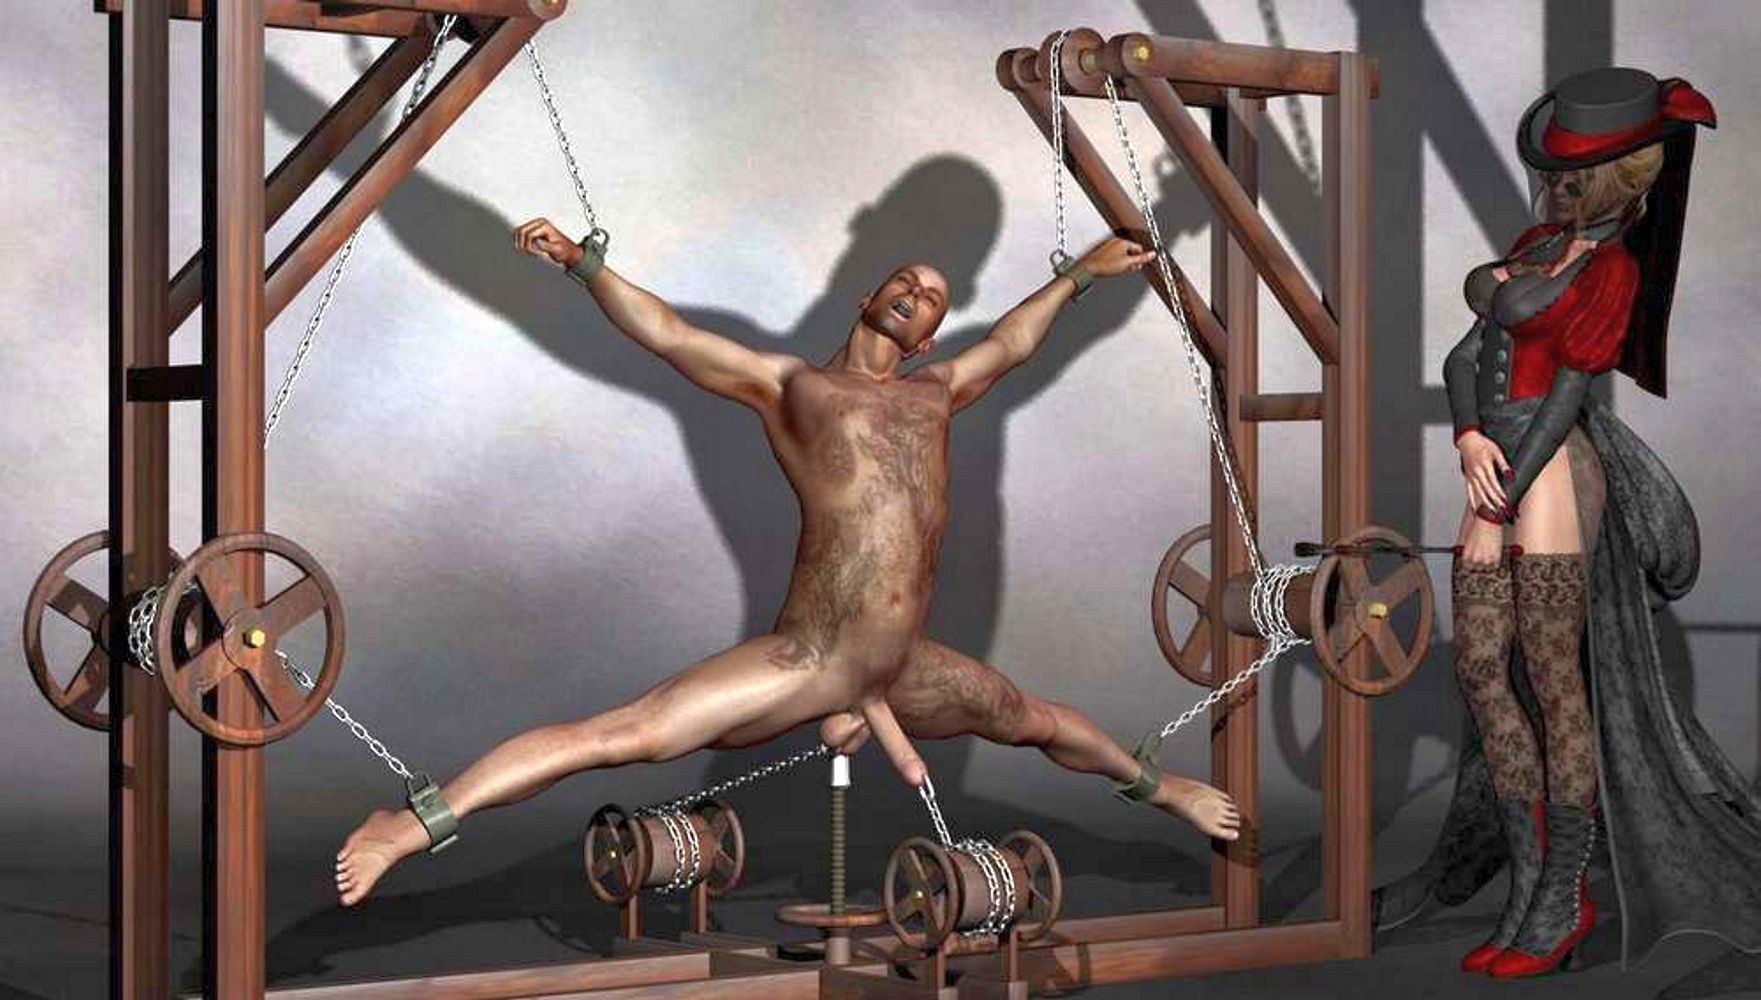 S cold bondage milking male slave